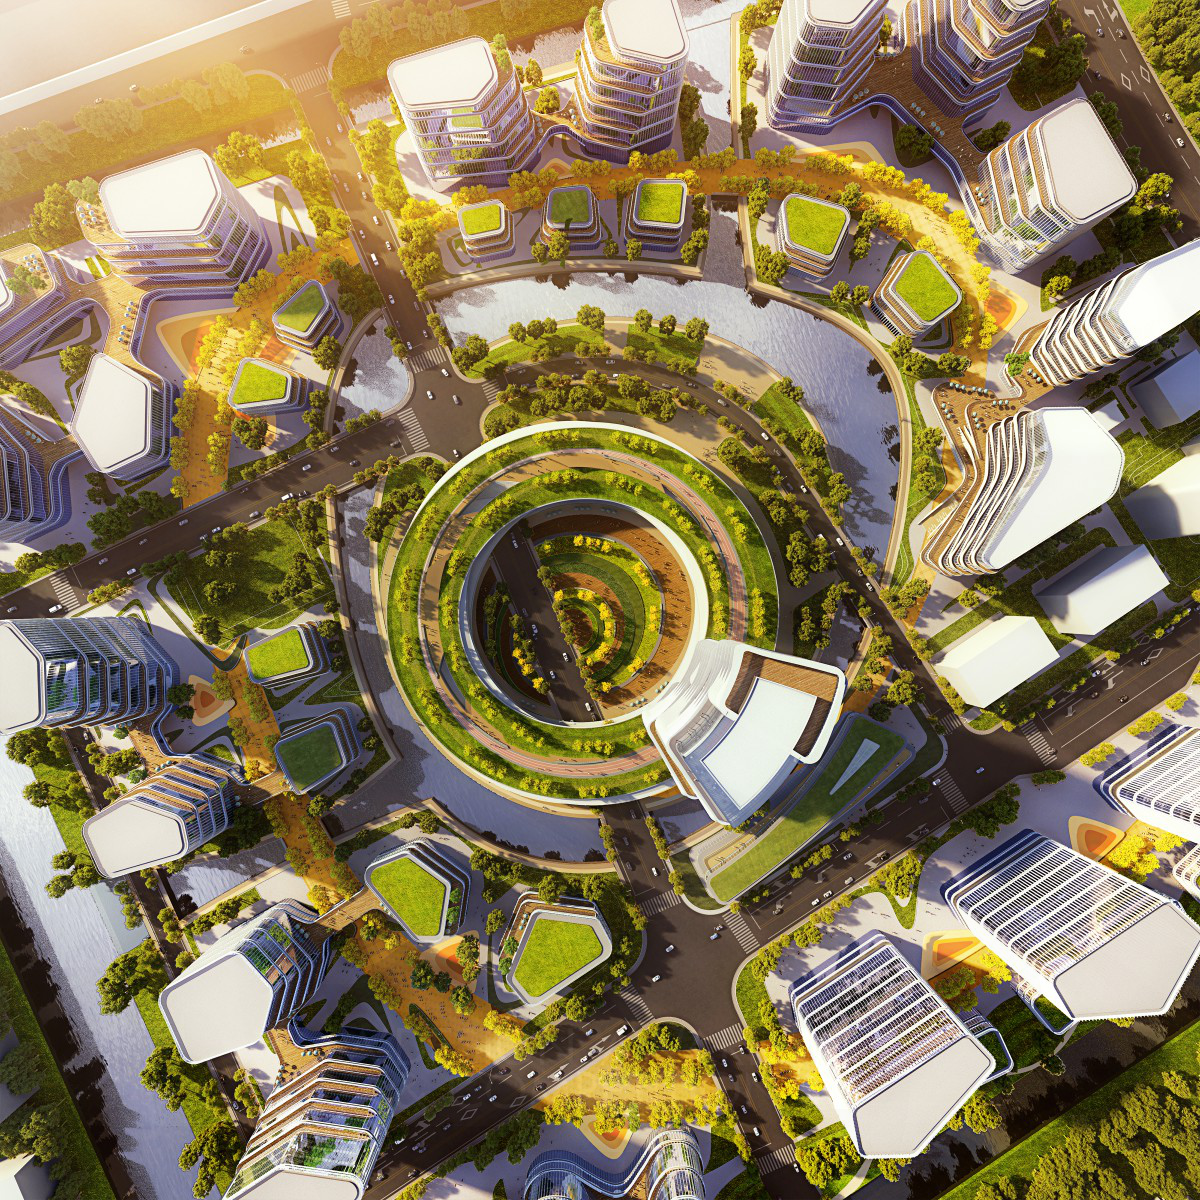 Liu Jinrui wins Silver at the prestigious A' City Planning and Urban Design Award with Fibonacci Spiral Industrial Park.